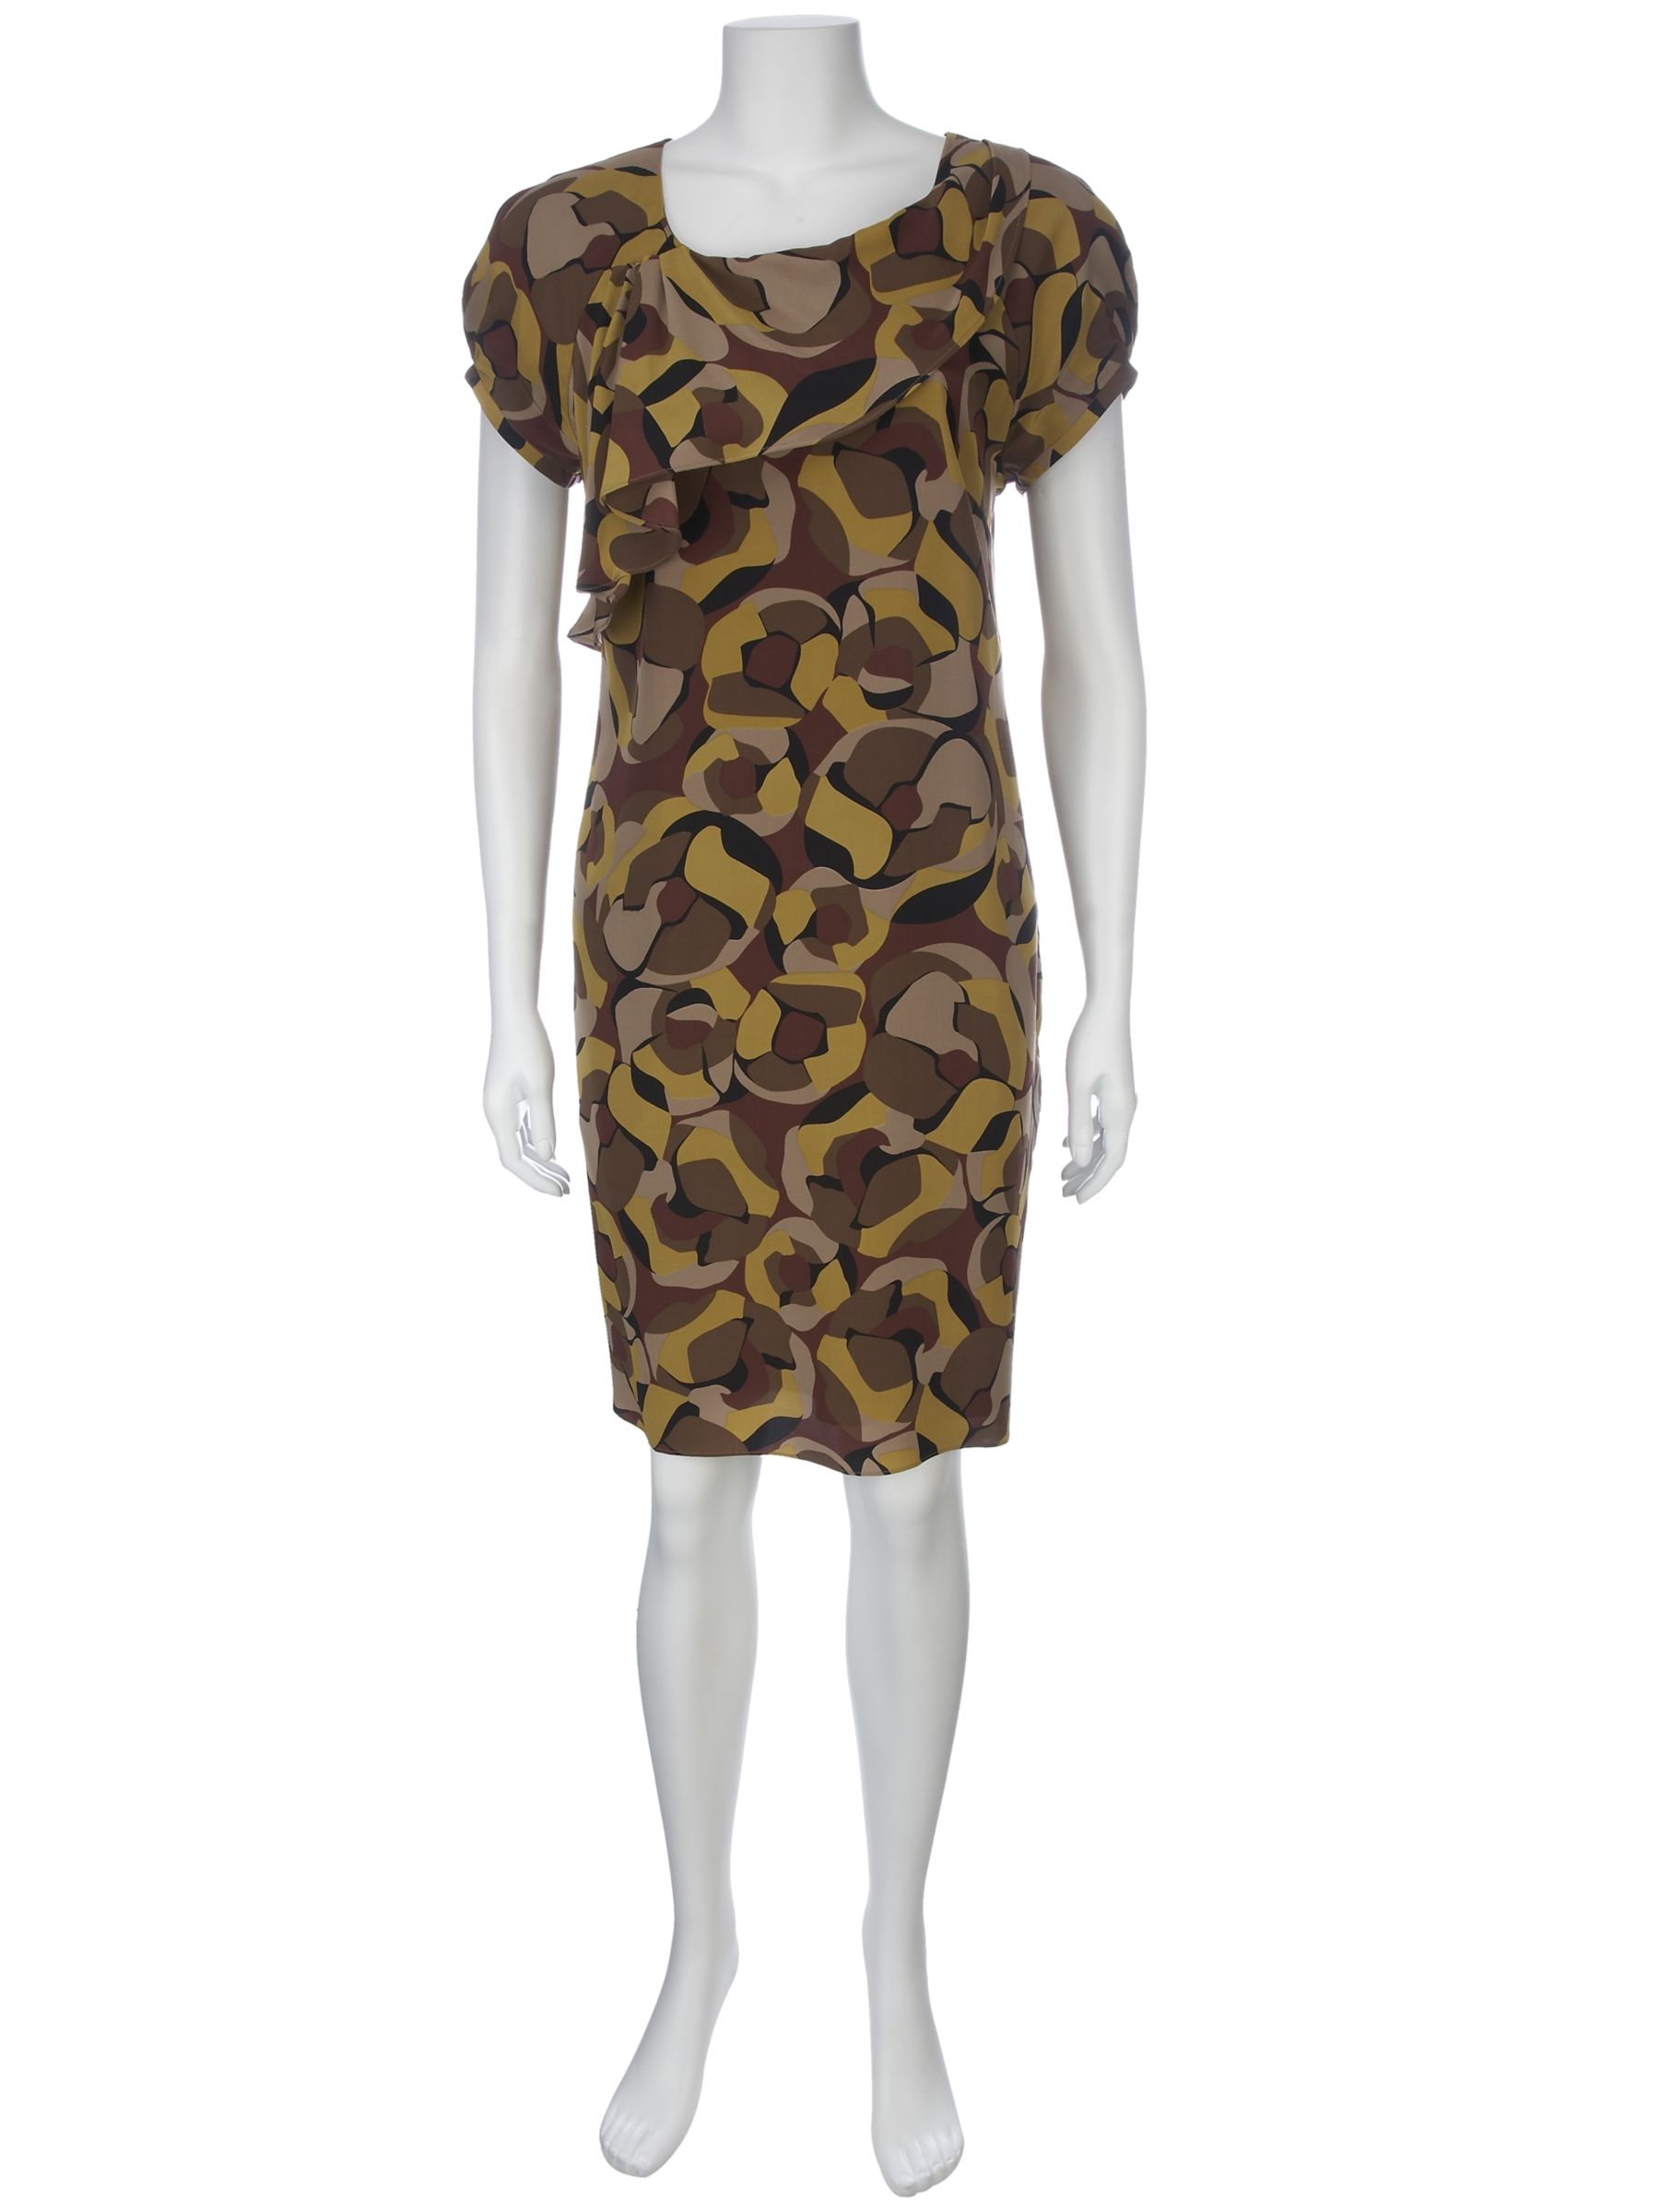 FWM Scarf Flower Silk Print Dress, Chartreuse combo at John Lewis